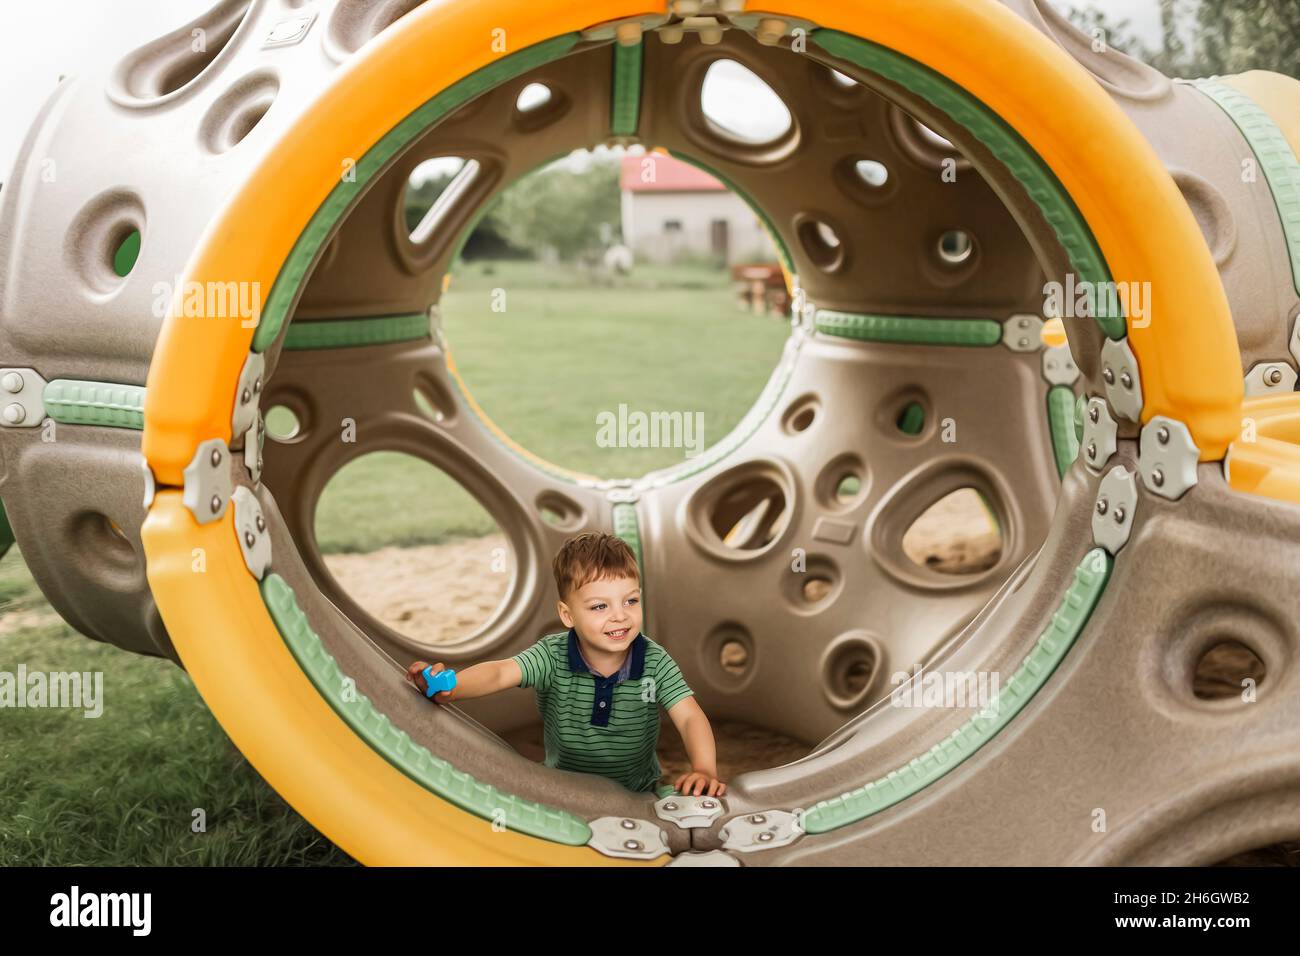 Blonde boy playing inside playground equipment Stock Photo